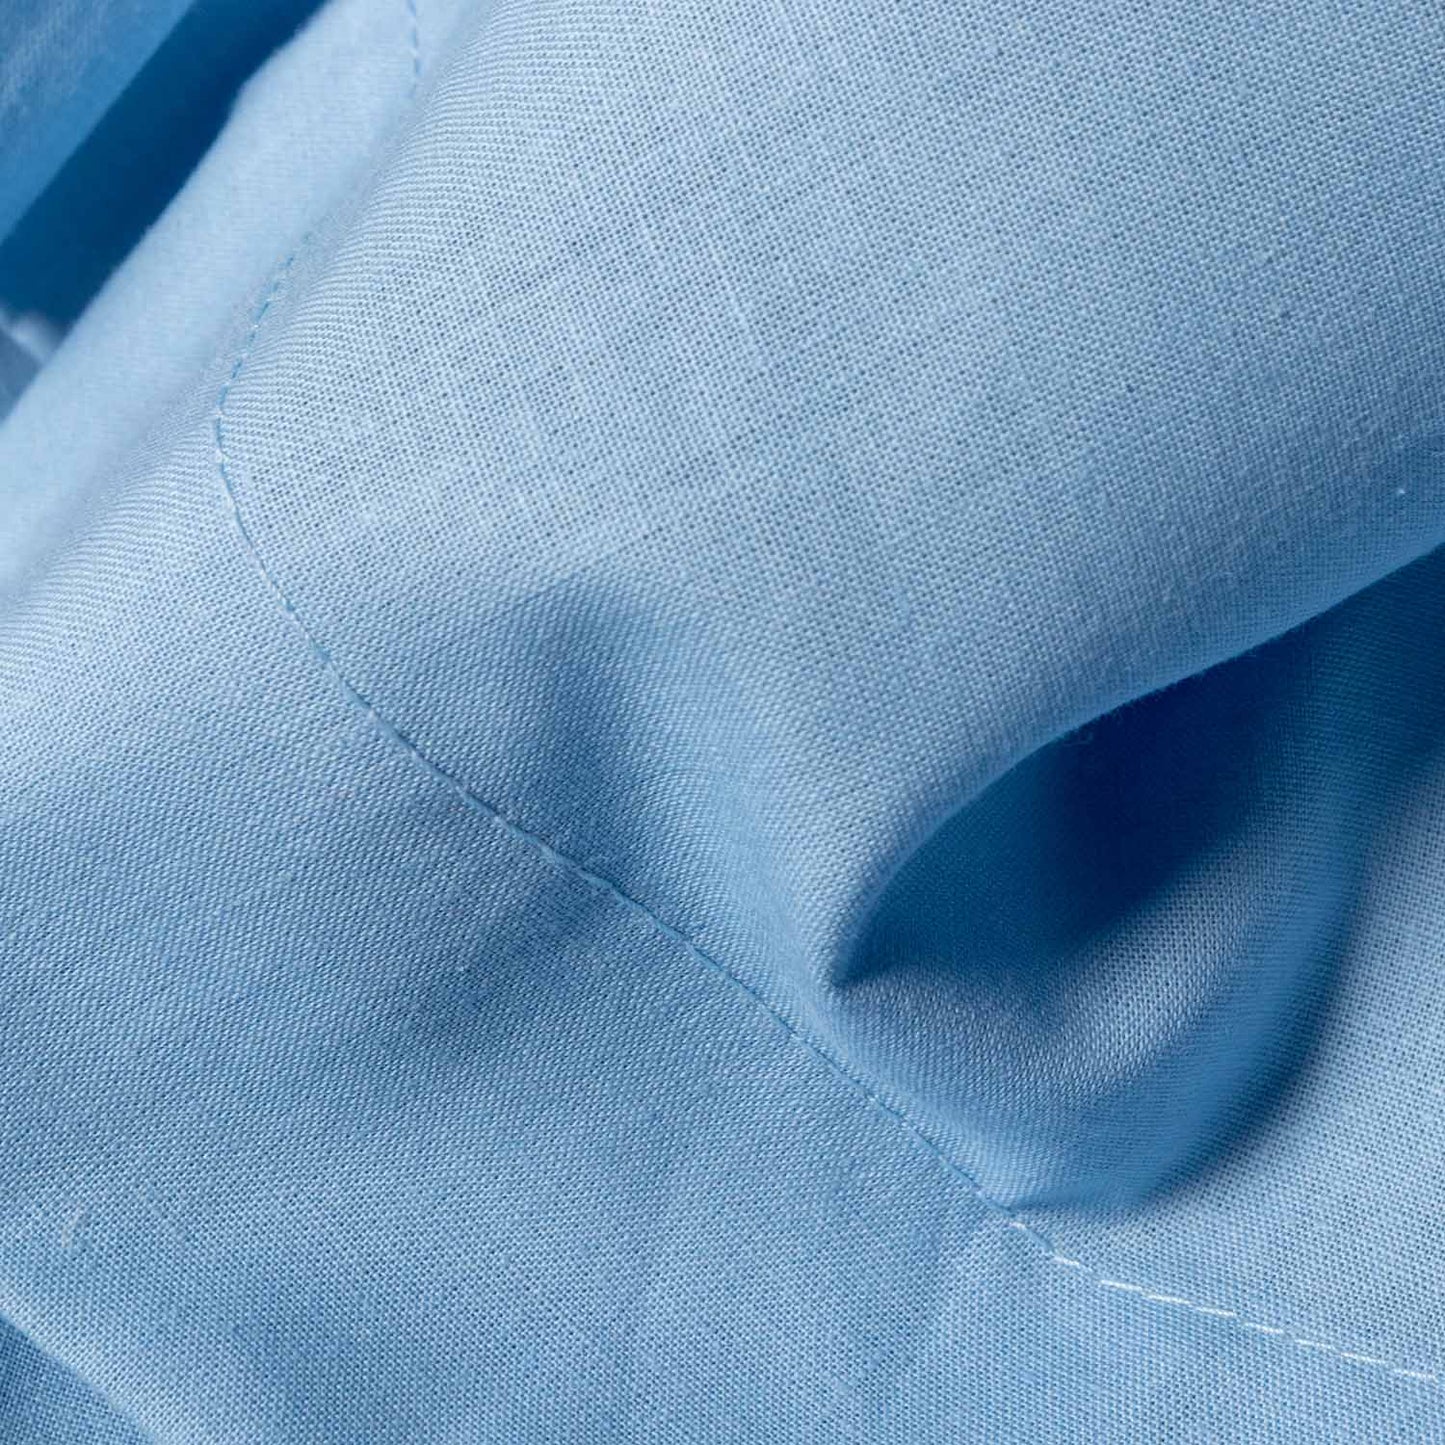 Funda de almohada 100% Algodón Basic, Color Azul.